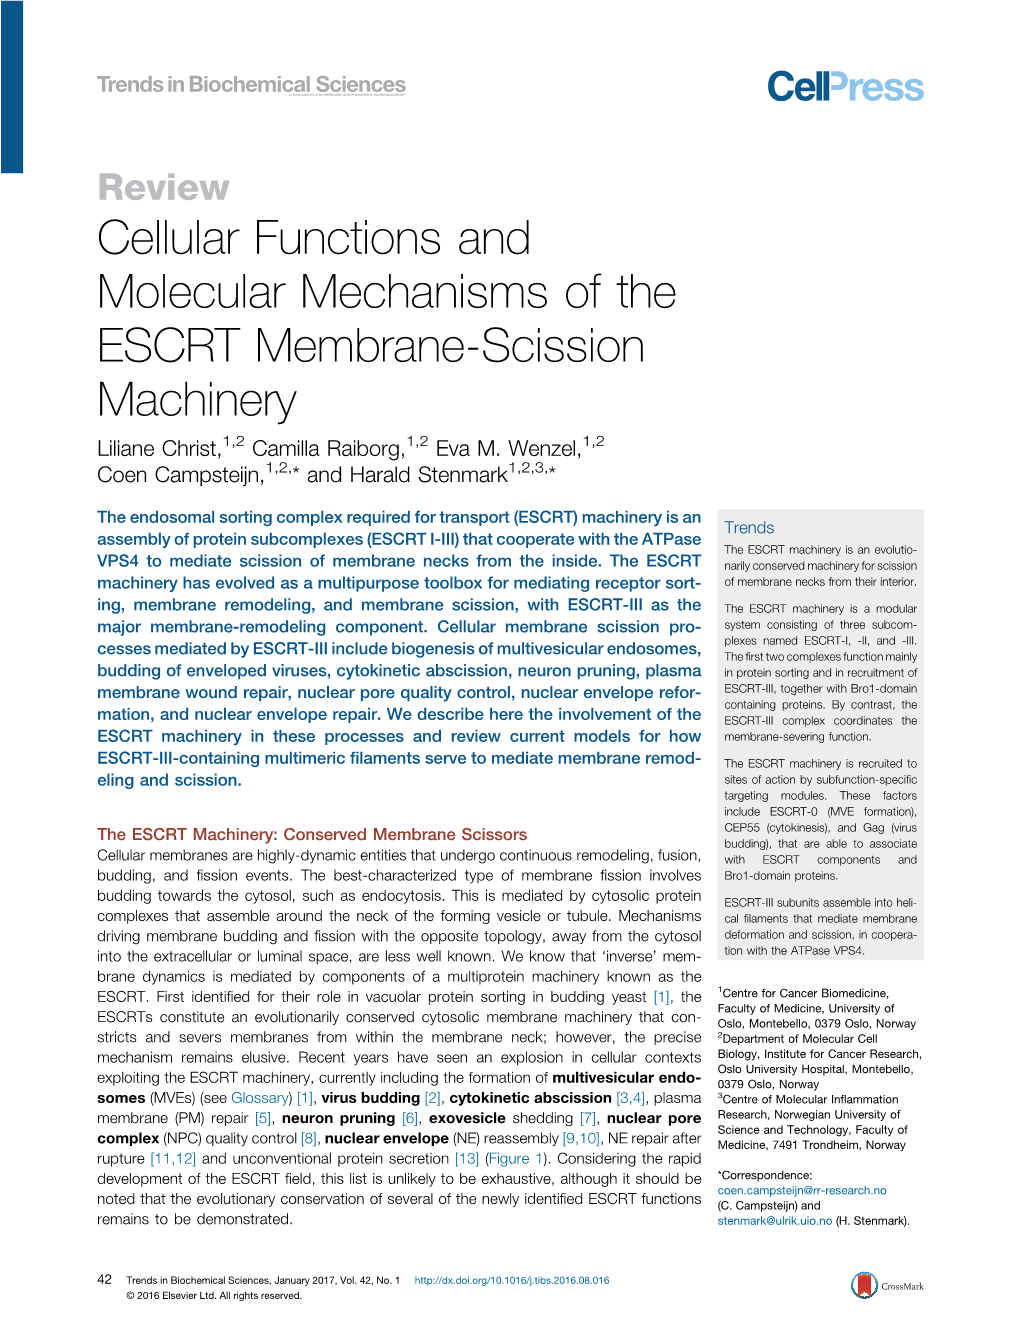 Cellular Functions and Molecular Mechanisms of the ESCRT